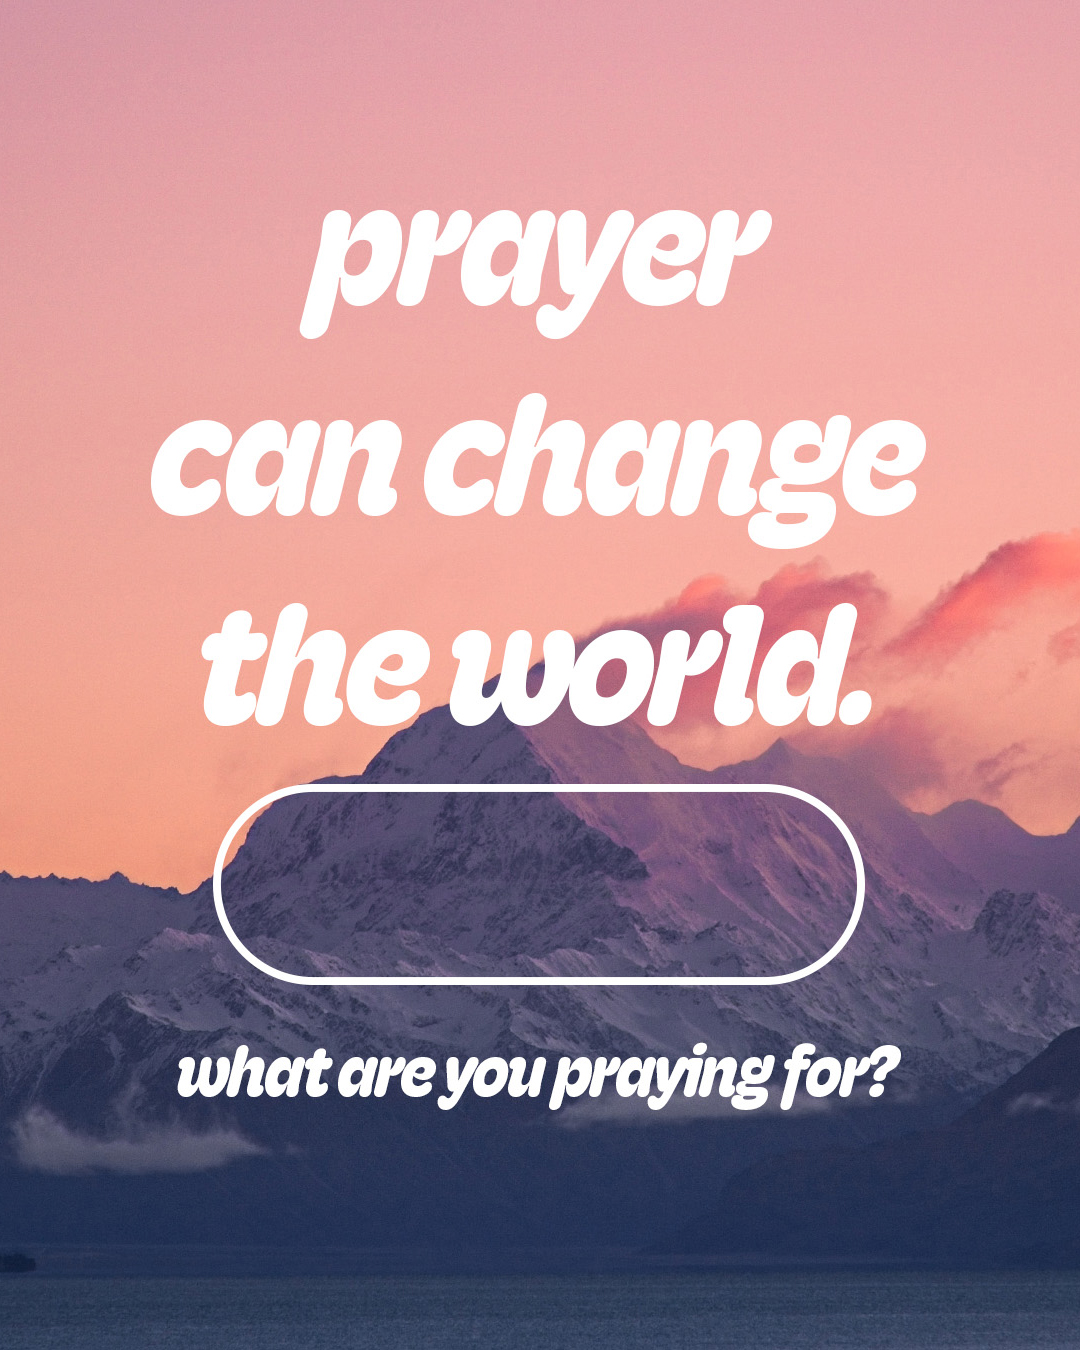 Prayer can change the world.